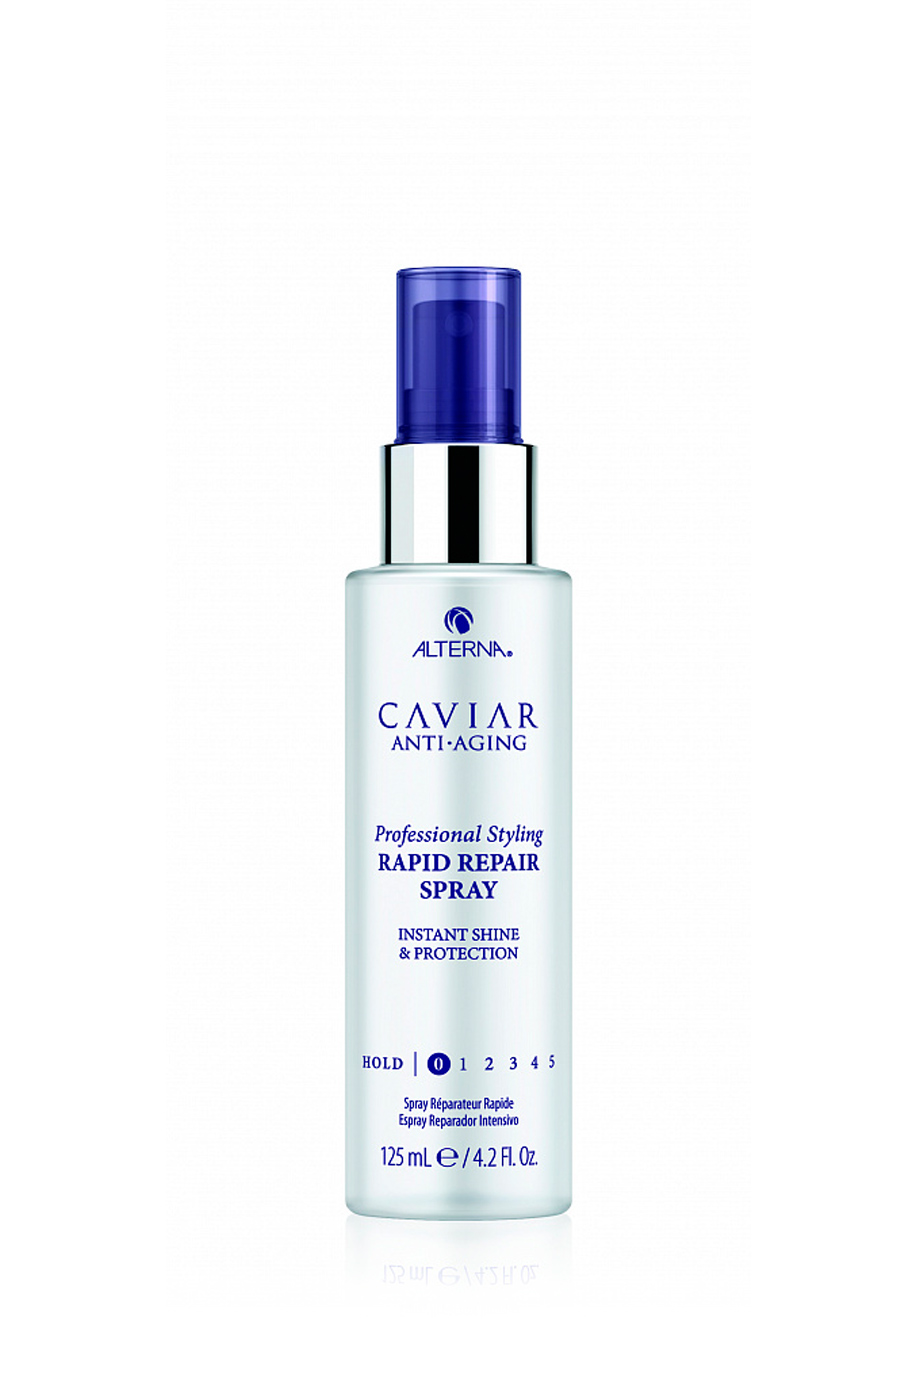 Alterna Caviar Anti-Aging Professional Styling Rapid Repair Spray